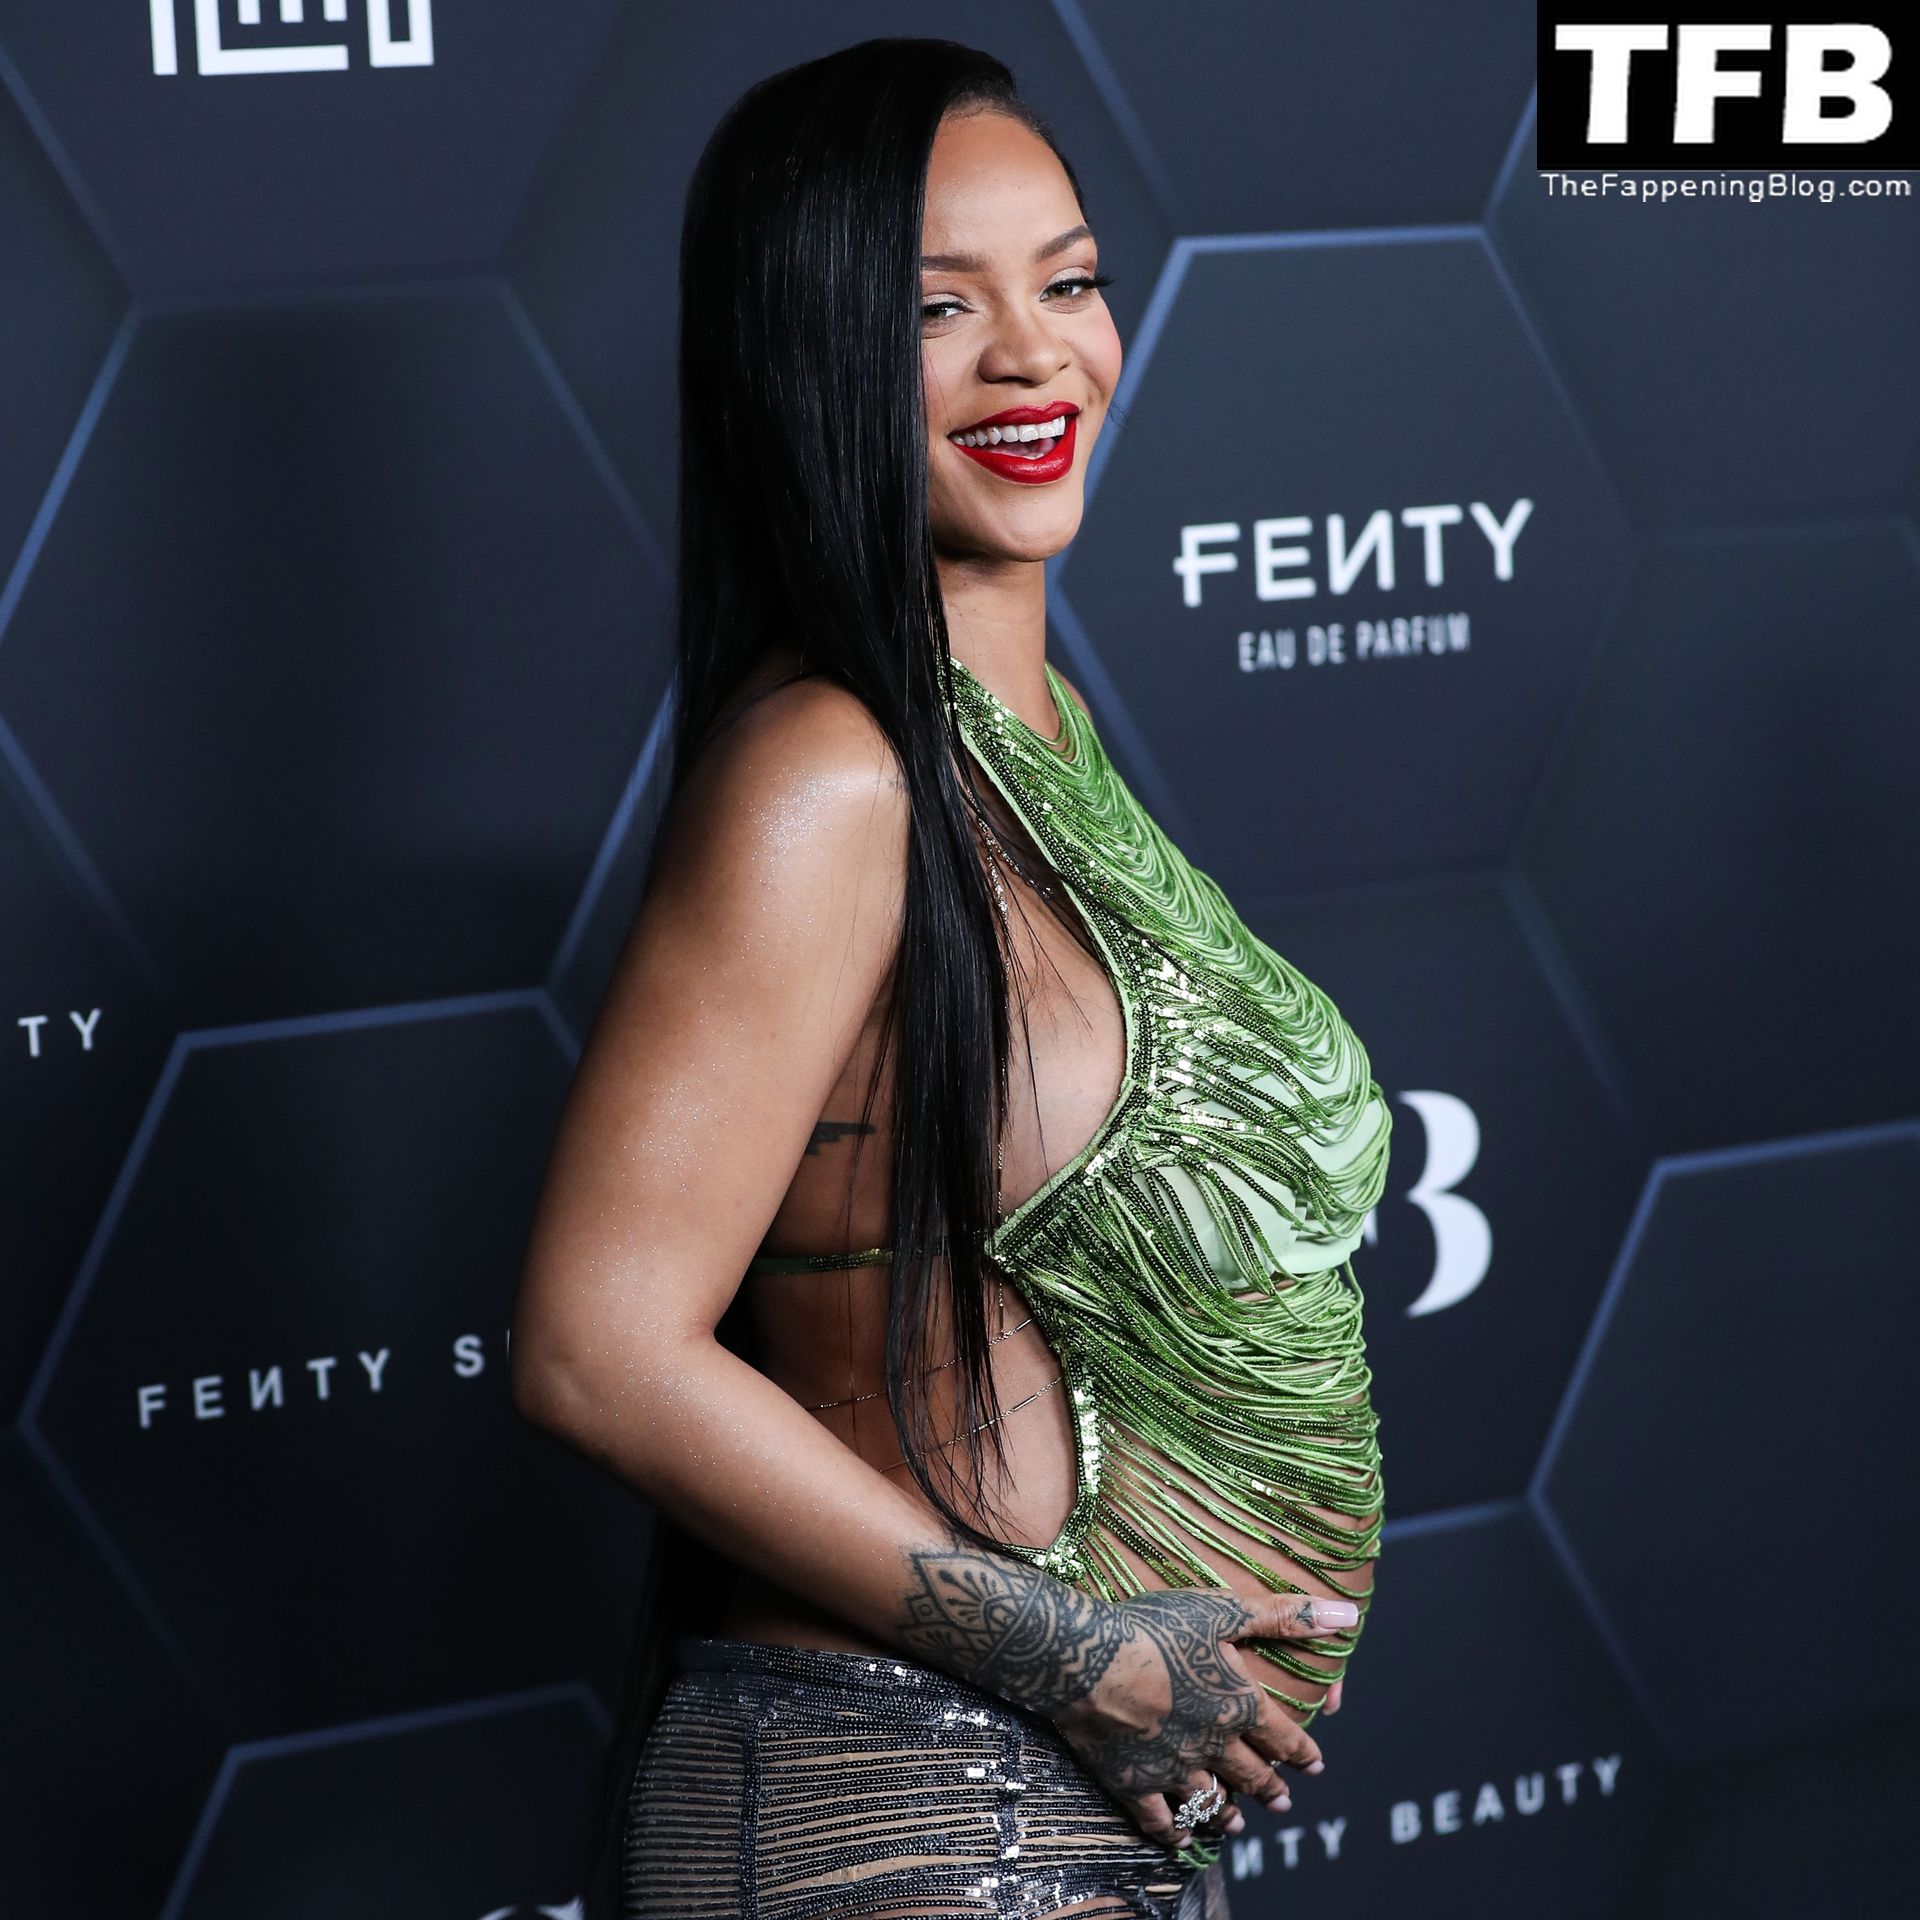 Rihanna-Sexy-The-Fappening-Blog-38.jpg